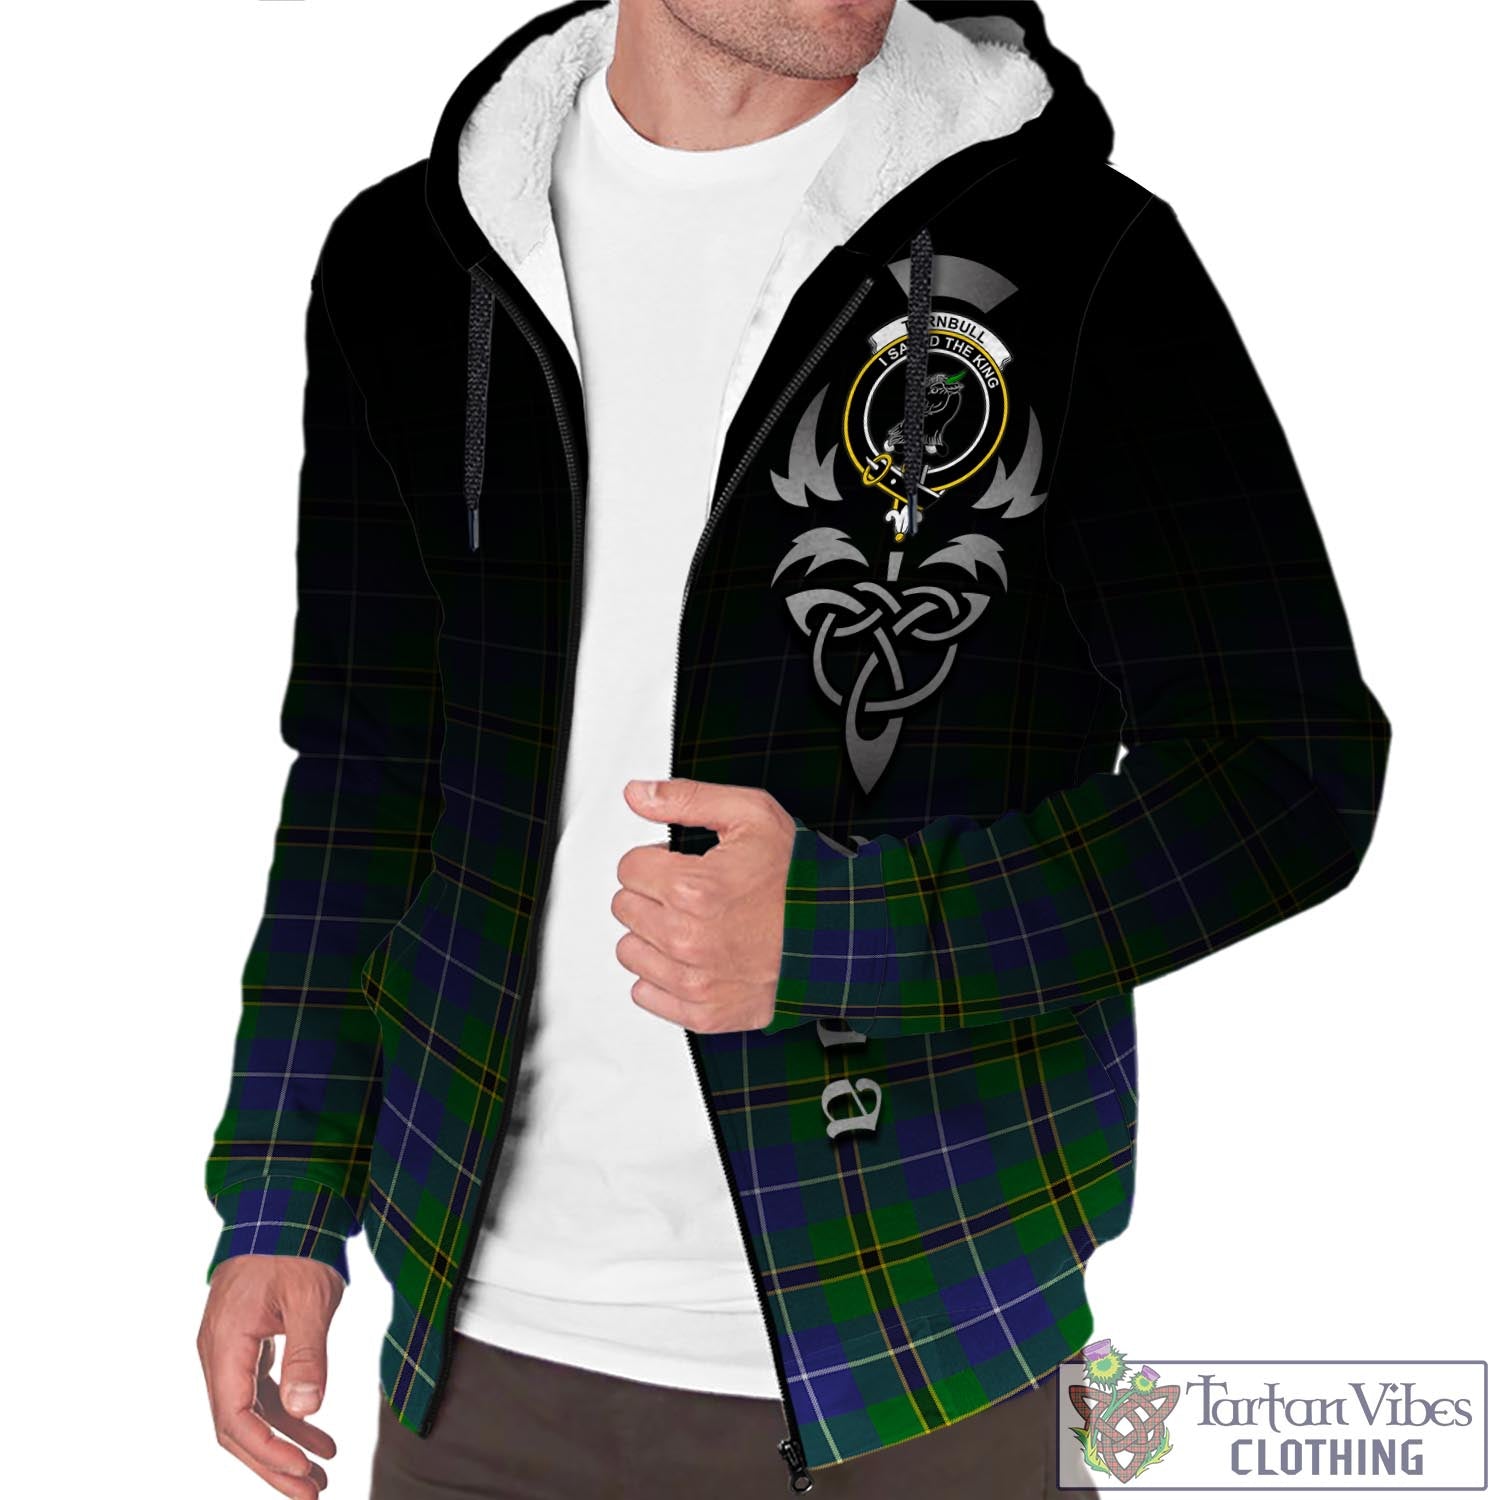 Tartan Vibes Clothing Turnbull Hunting Tartan Sherpa Hoodie Featuring Alba Gu Brath Family Crest Celtic Inspired